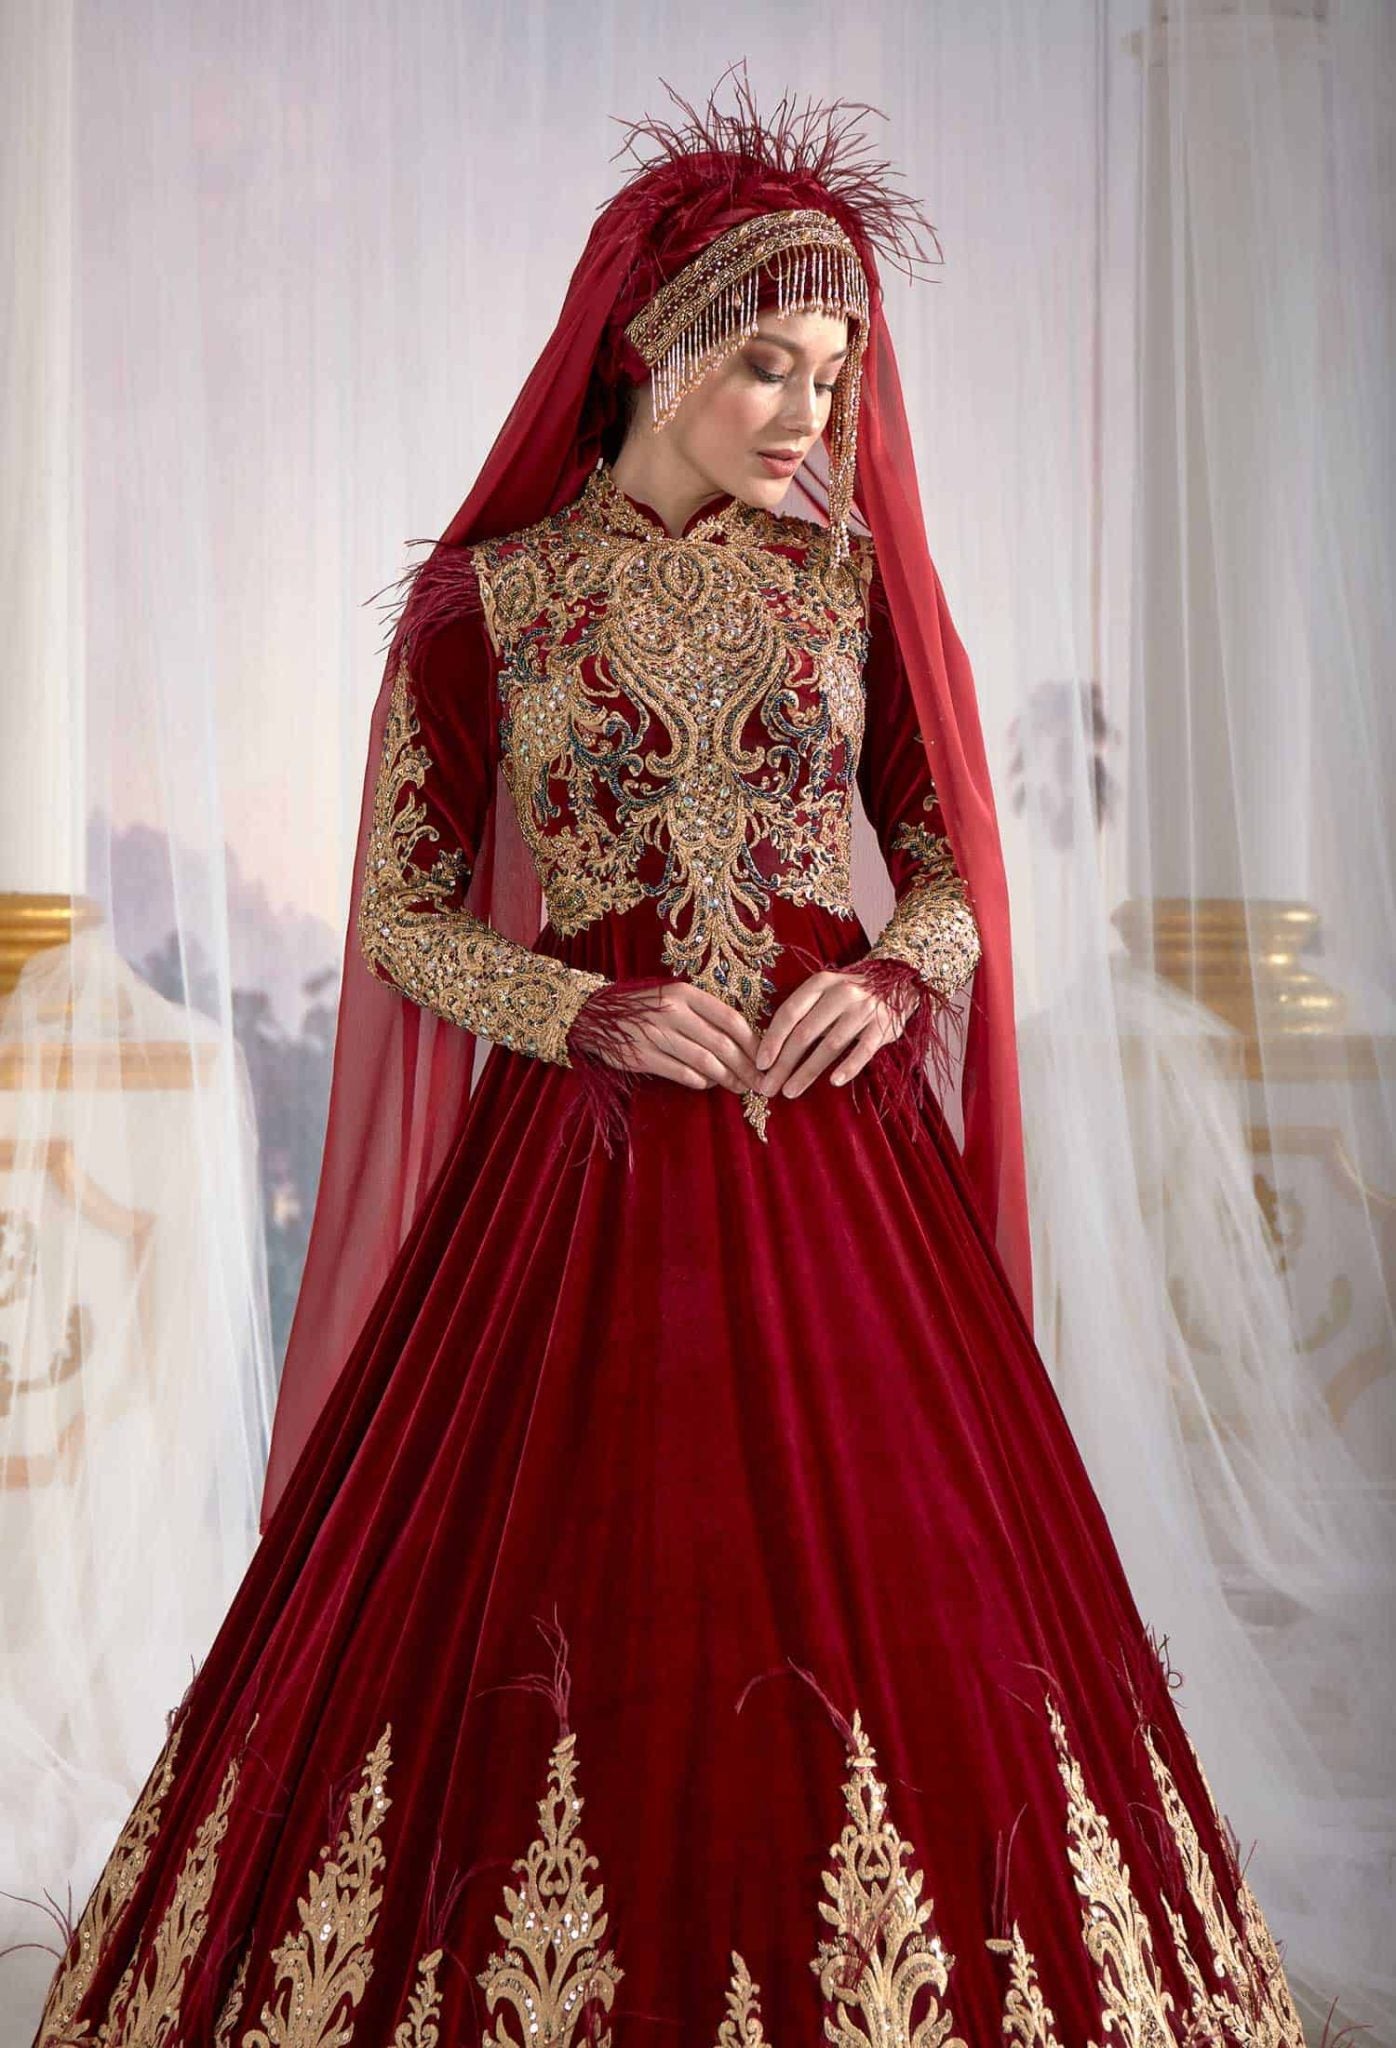 Red Ottoman Turkish Caftan Golden embroidery kaftan dress islamic party wear hijab clothing online shop buy long evening dress (2)